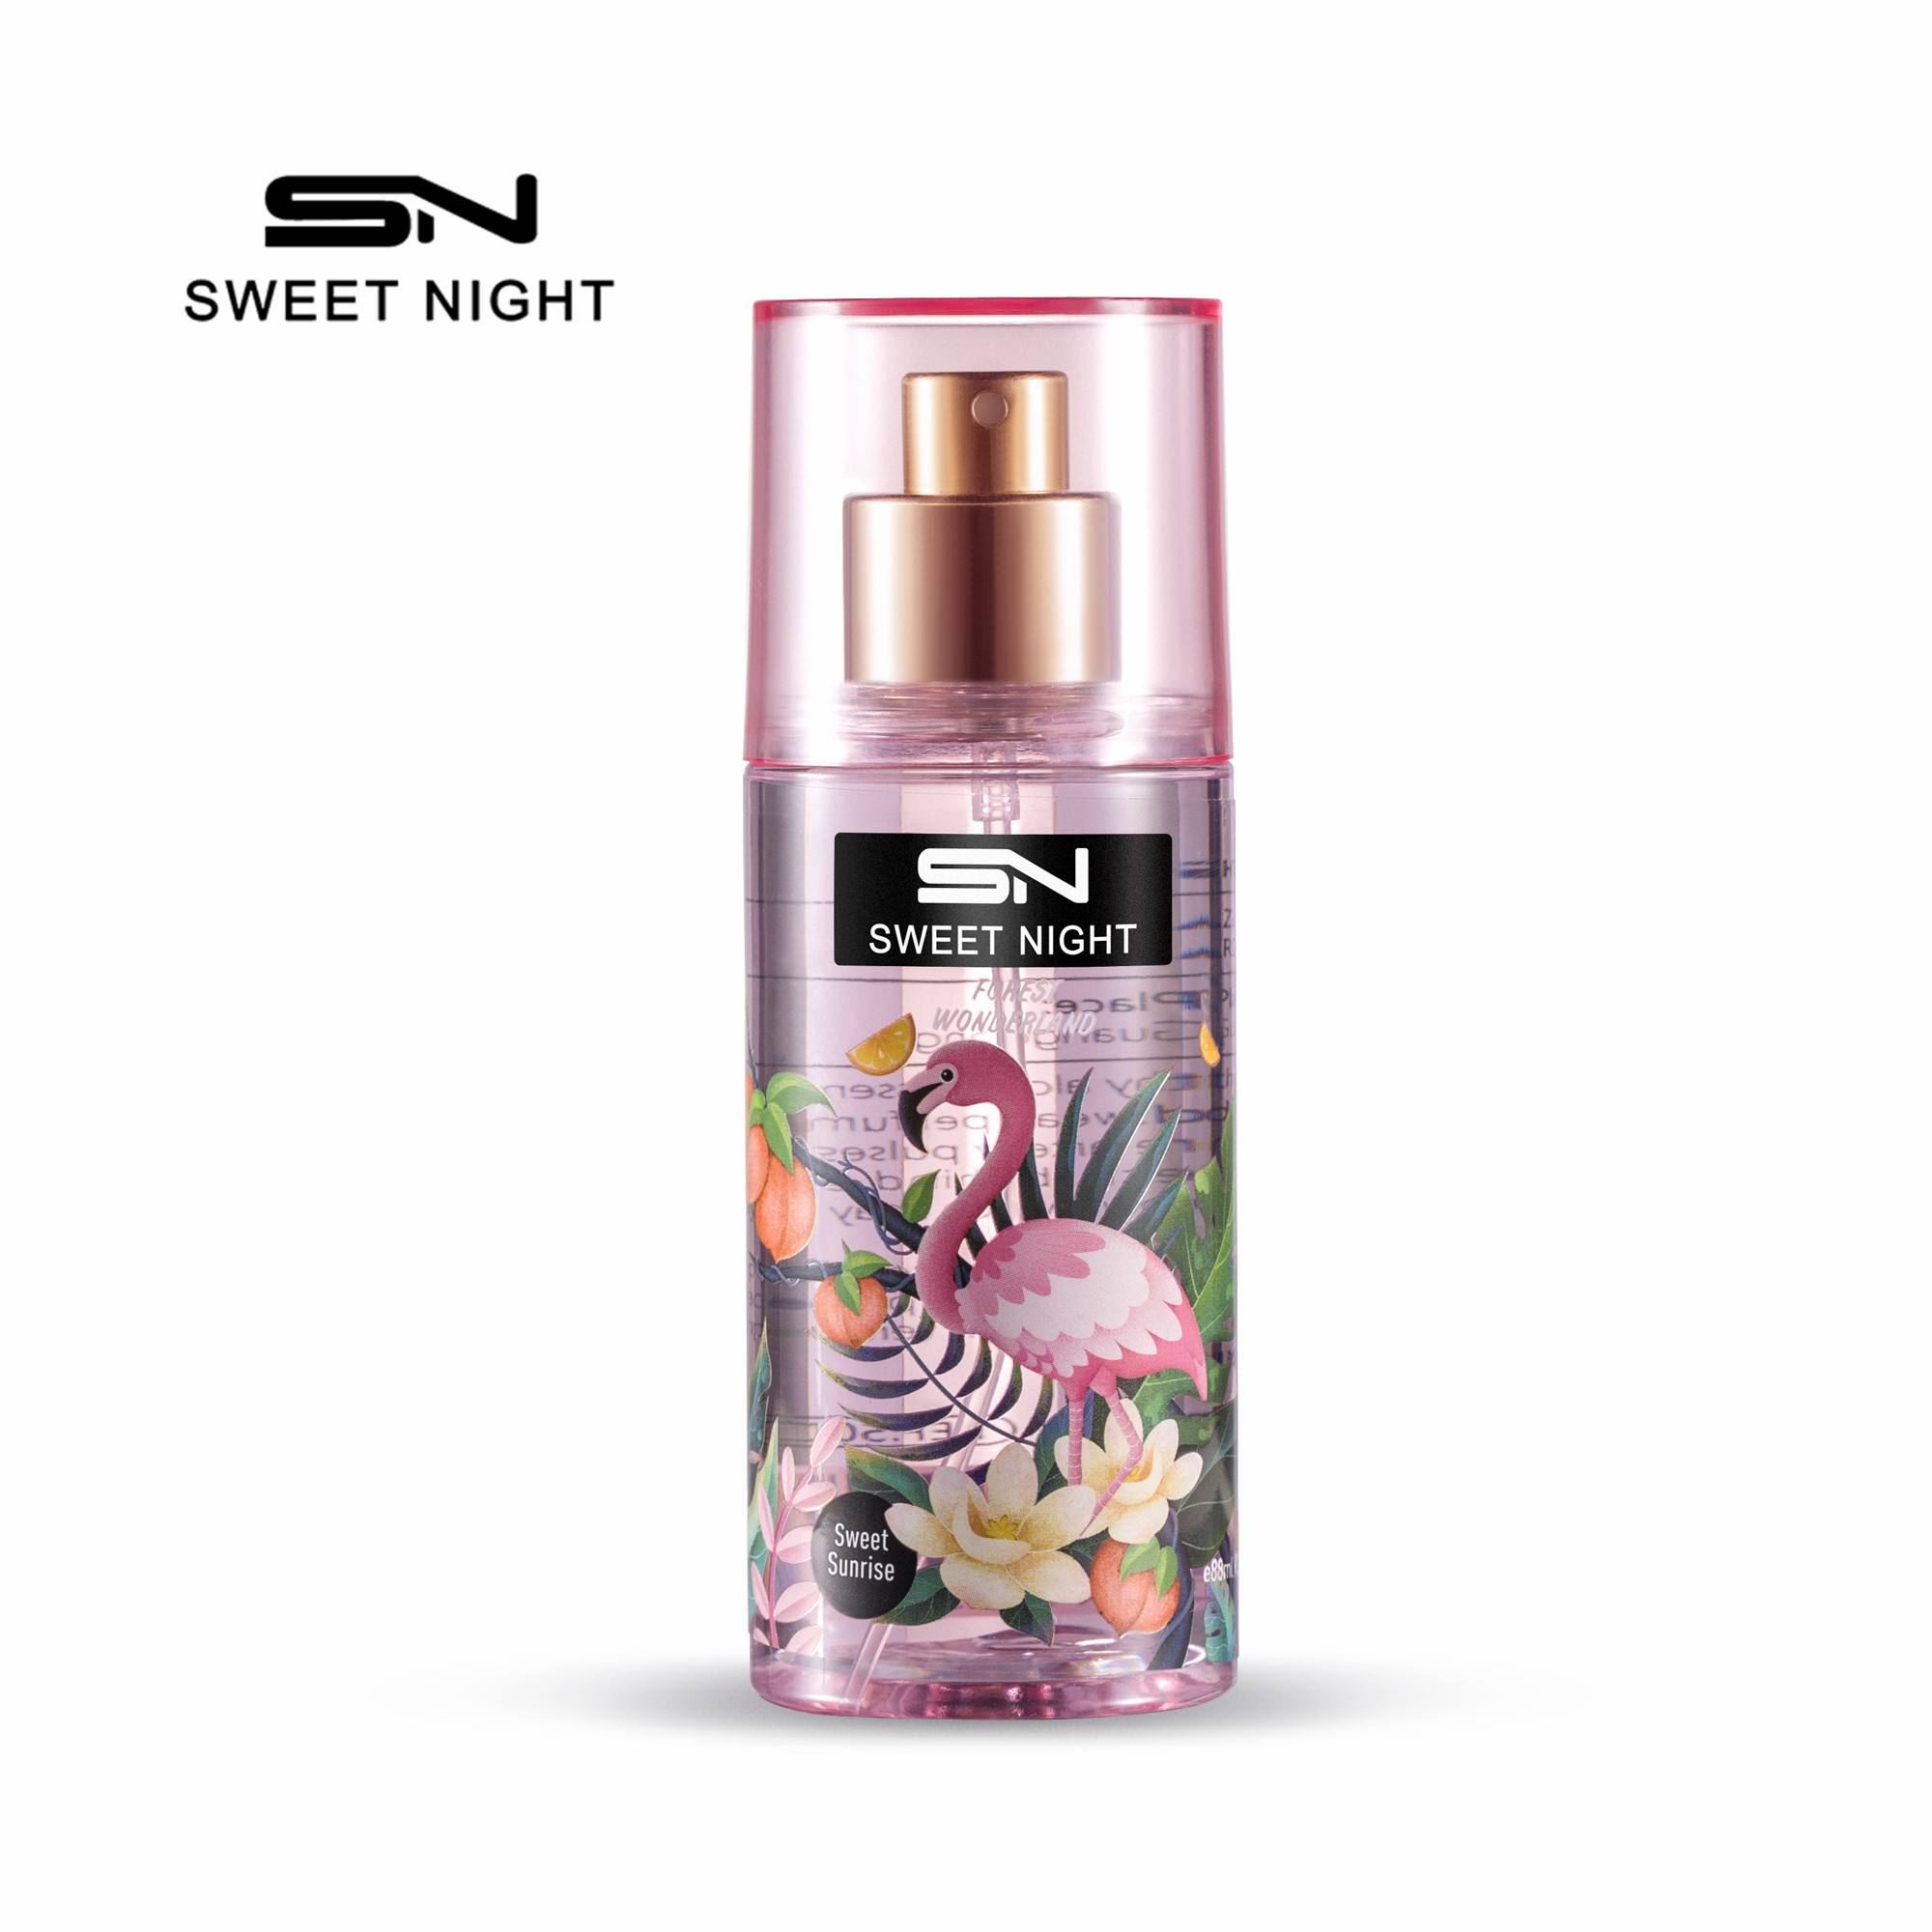 Watch this before you buy SWEET NIGHT Warm Vanilla Sugar perfume! #mak